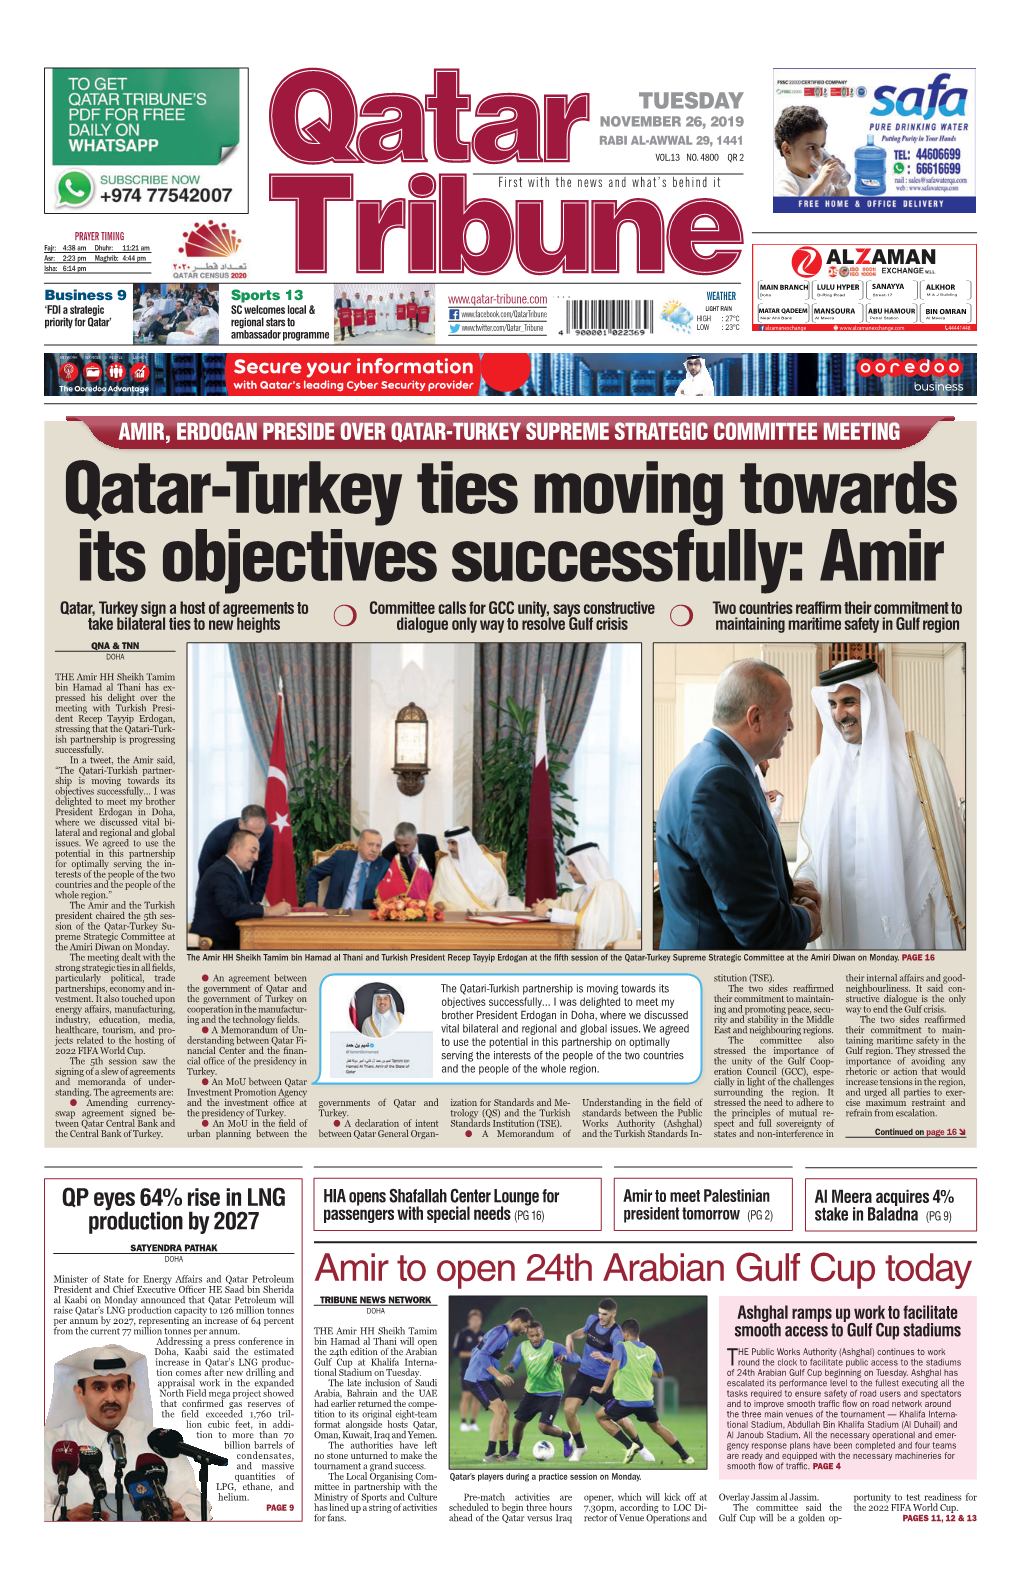 Qatar-Turkey Ties Moving Towards Its Objectives Successfully